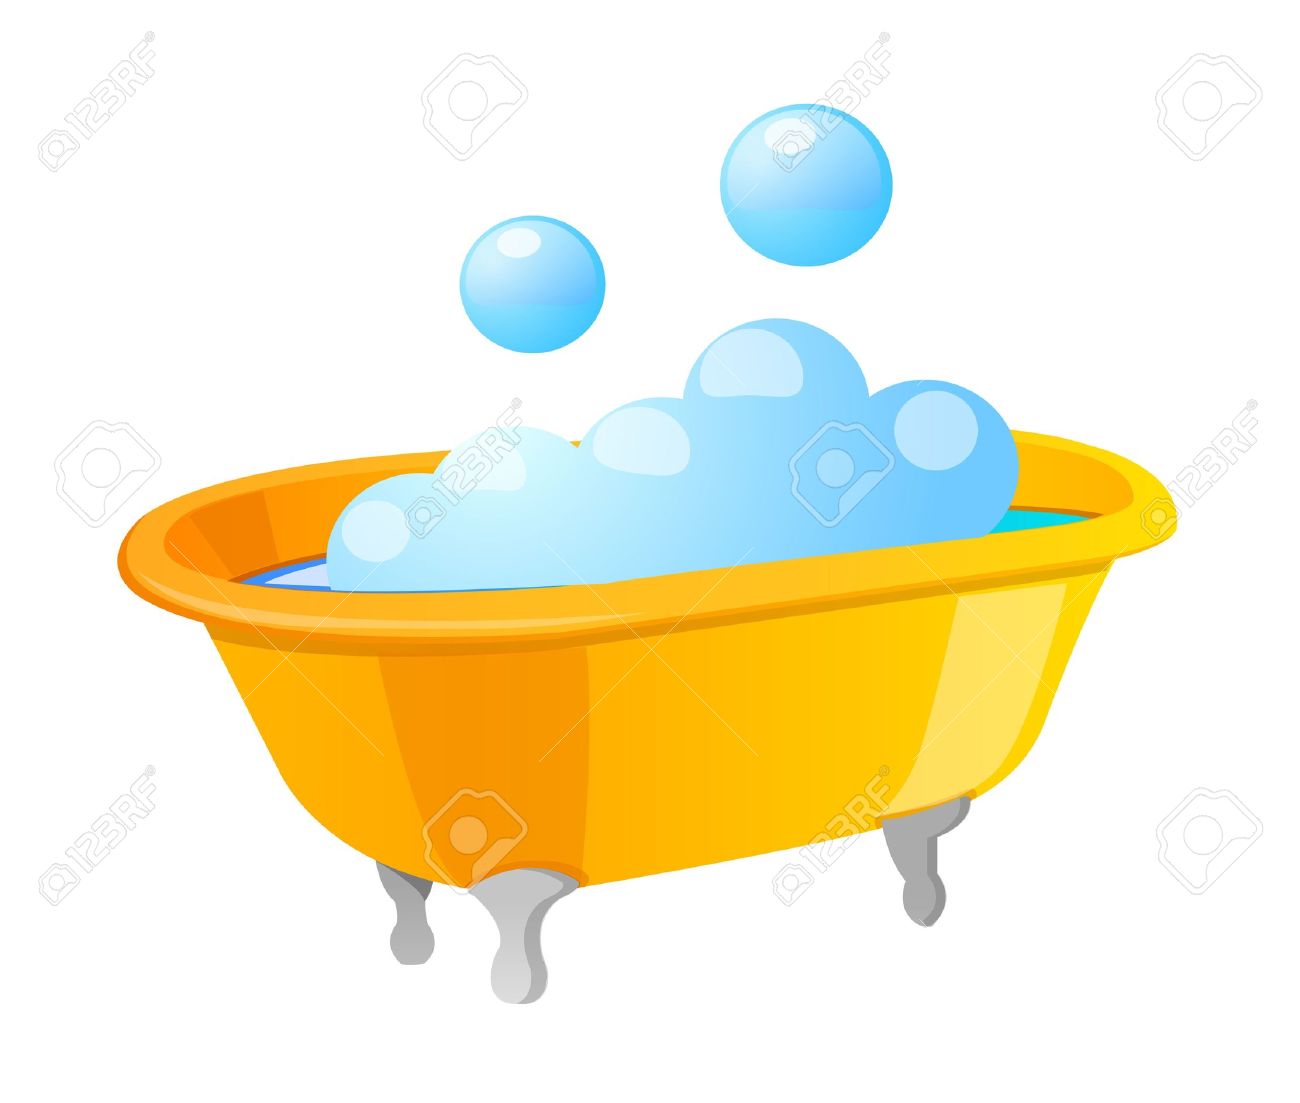 Baby Bath Tub Clipart. free illustration baby bath shower bath tub child free image on pixabay 